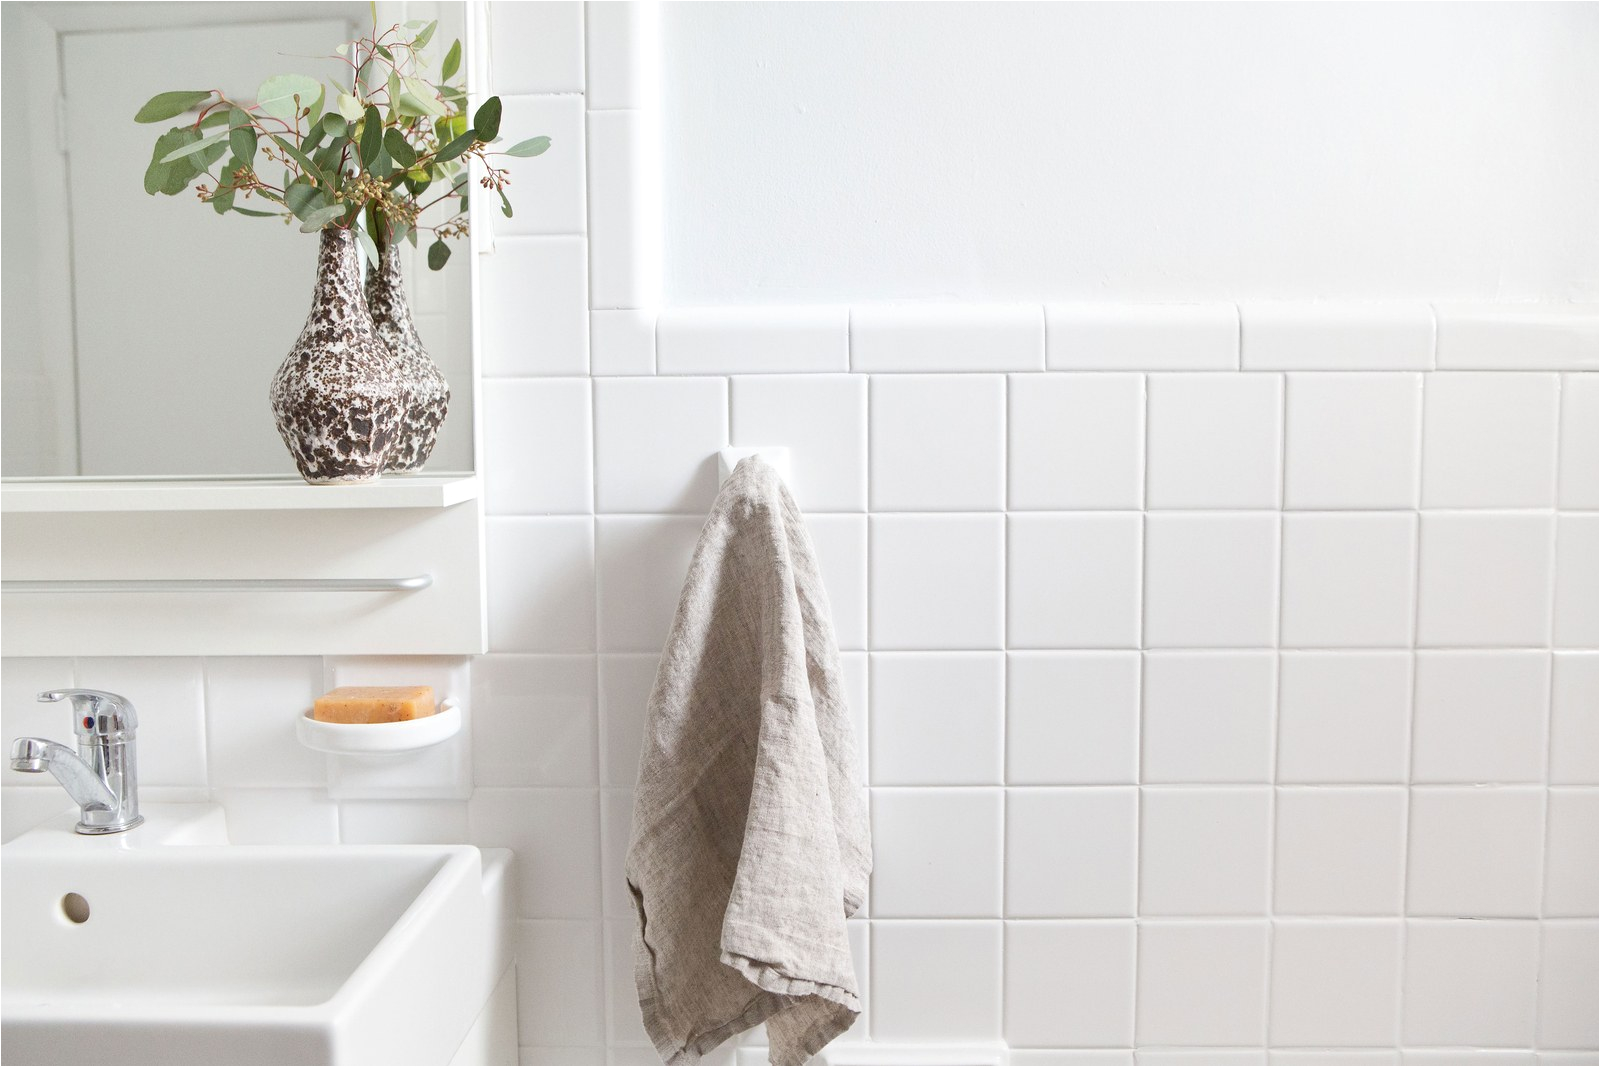 Reglazed Bathtub Peeling Reglazing Tile is the Most Transformative Fix for A Dated